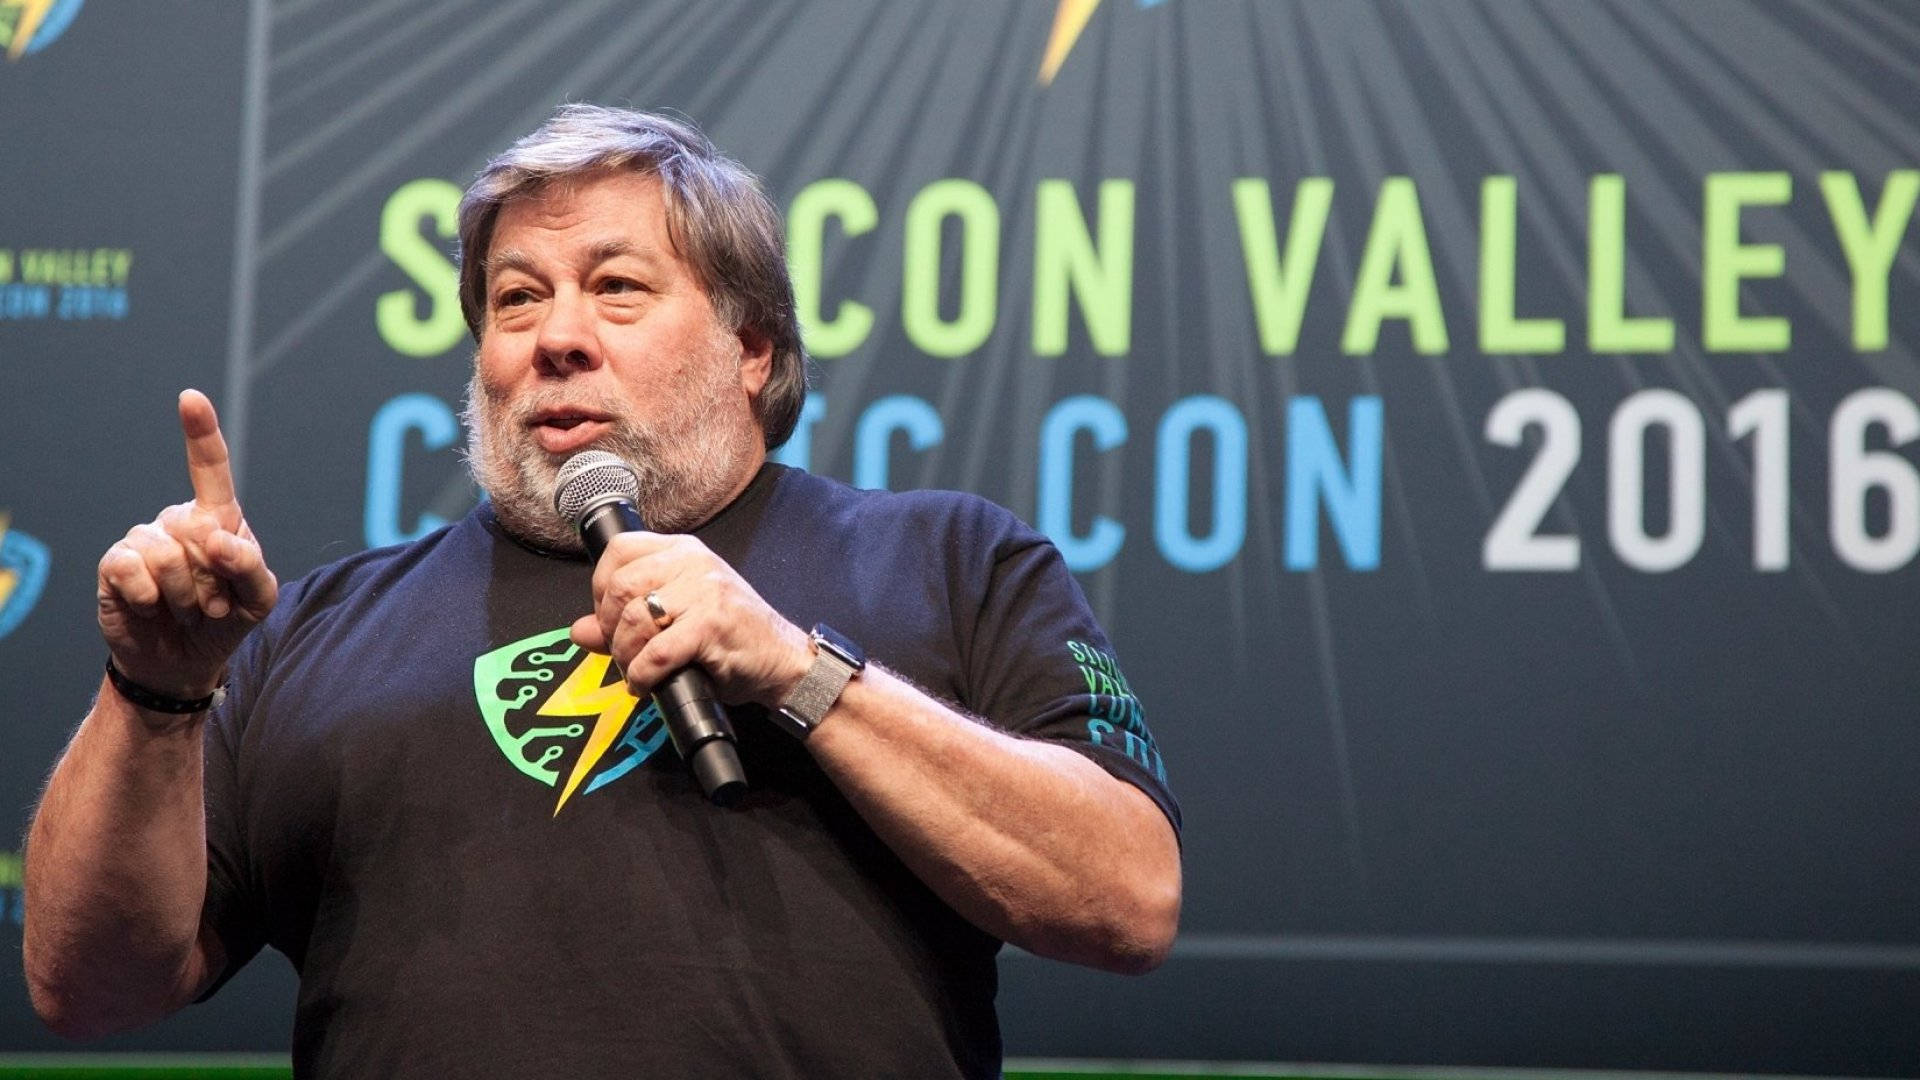 Steve Wozniak Silicon Valley Comic Con 2016 Tapet Wallpaper